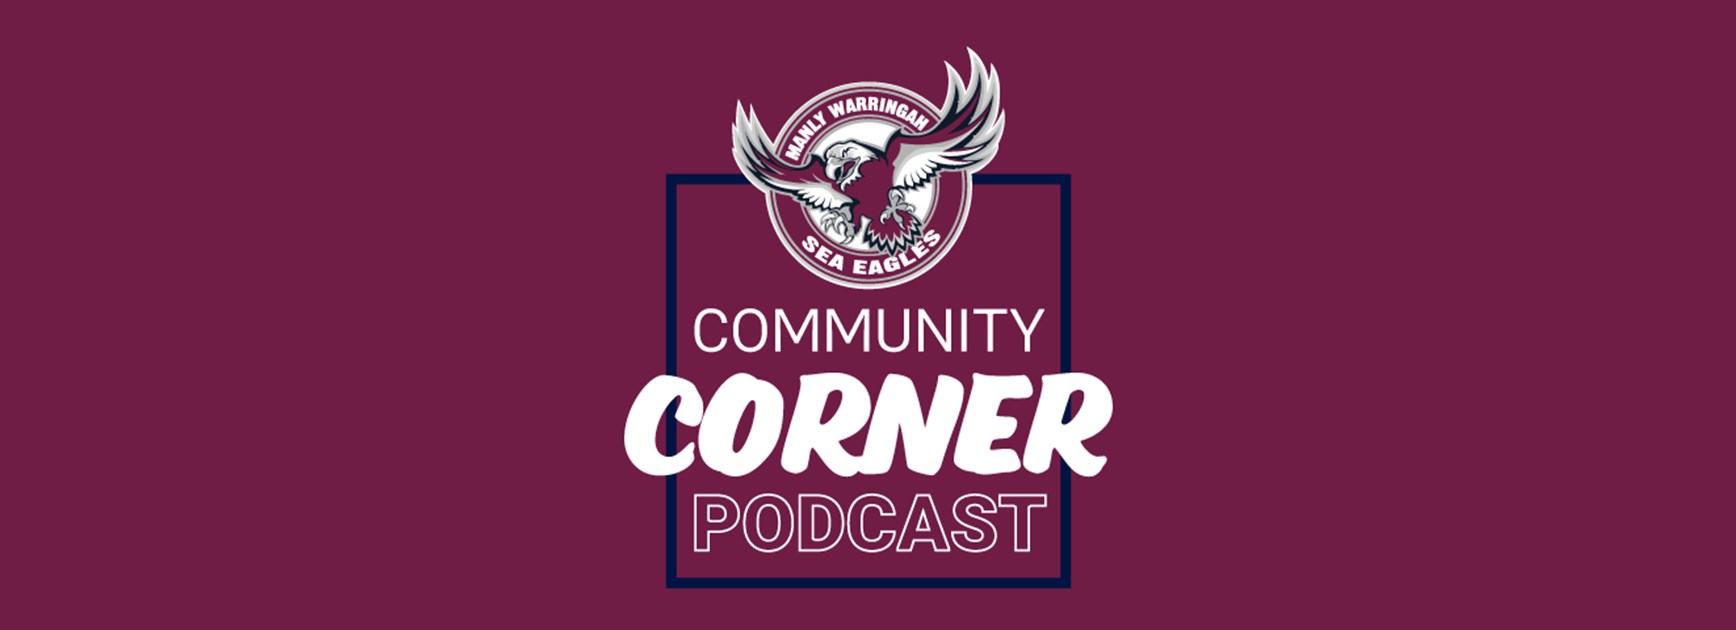 Community Episode 5: John Bonasera (Part 1)